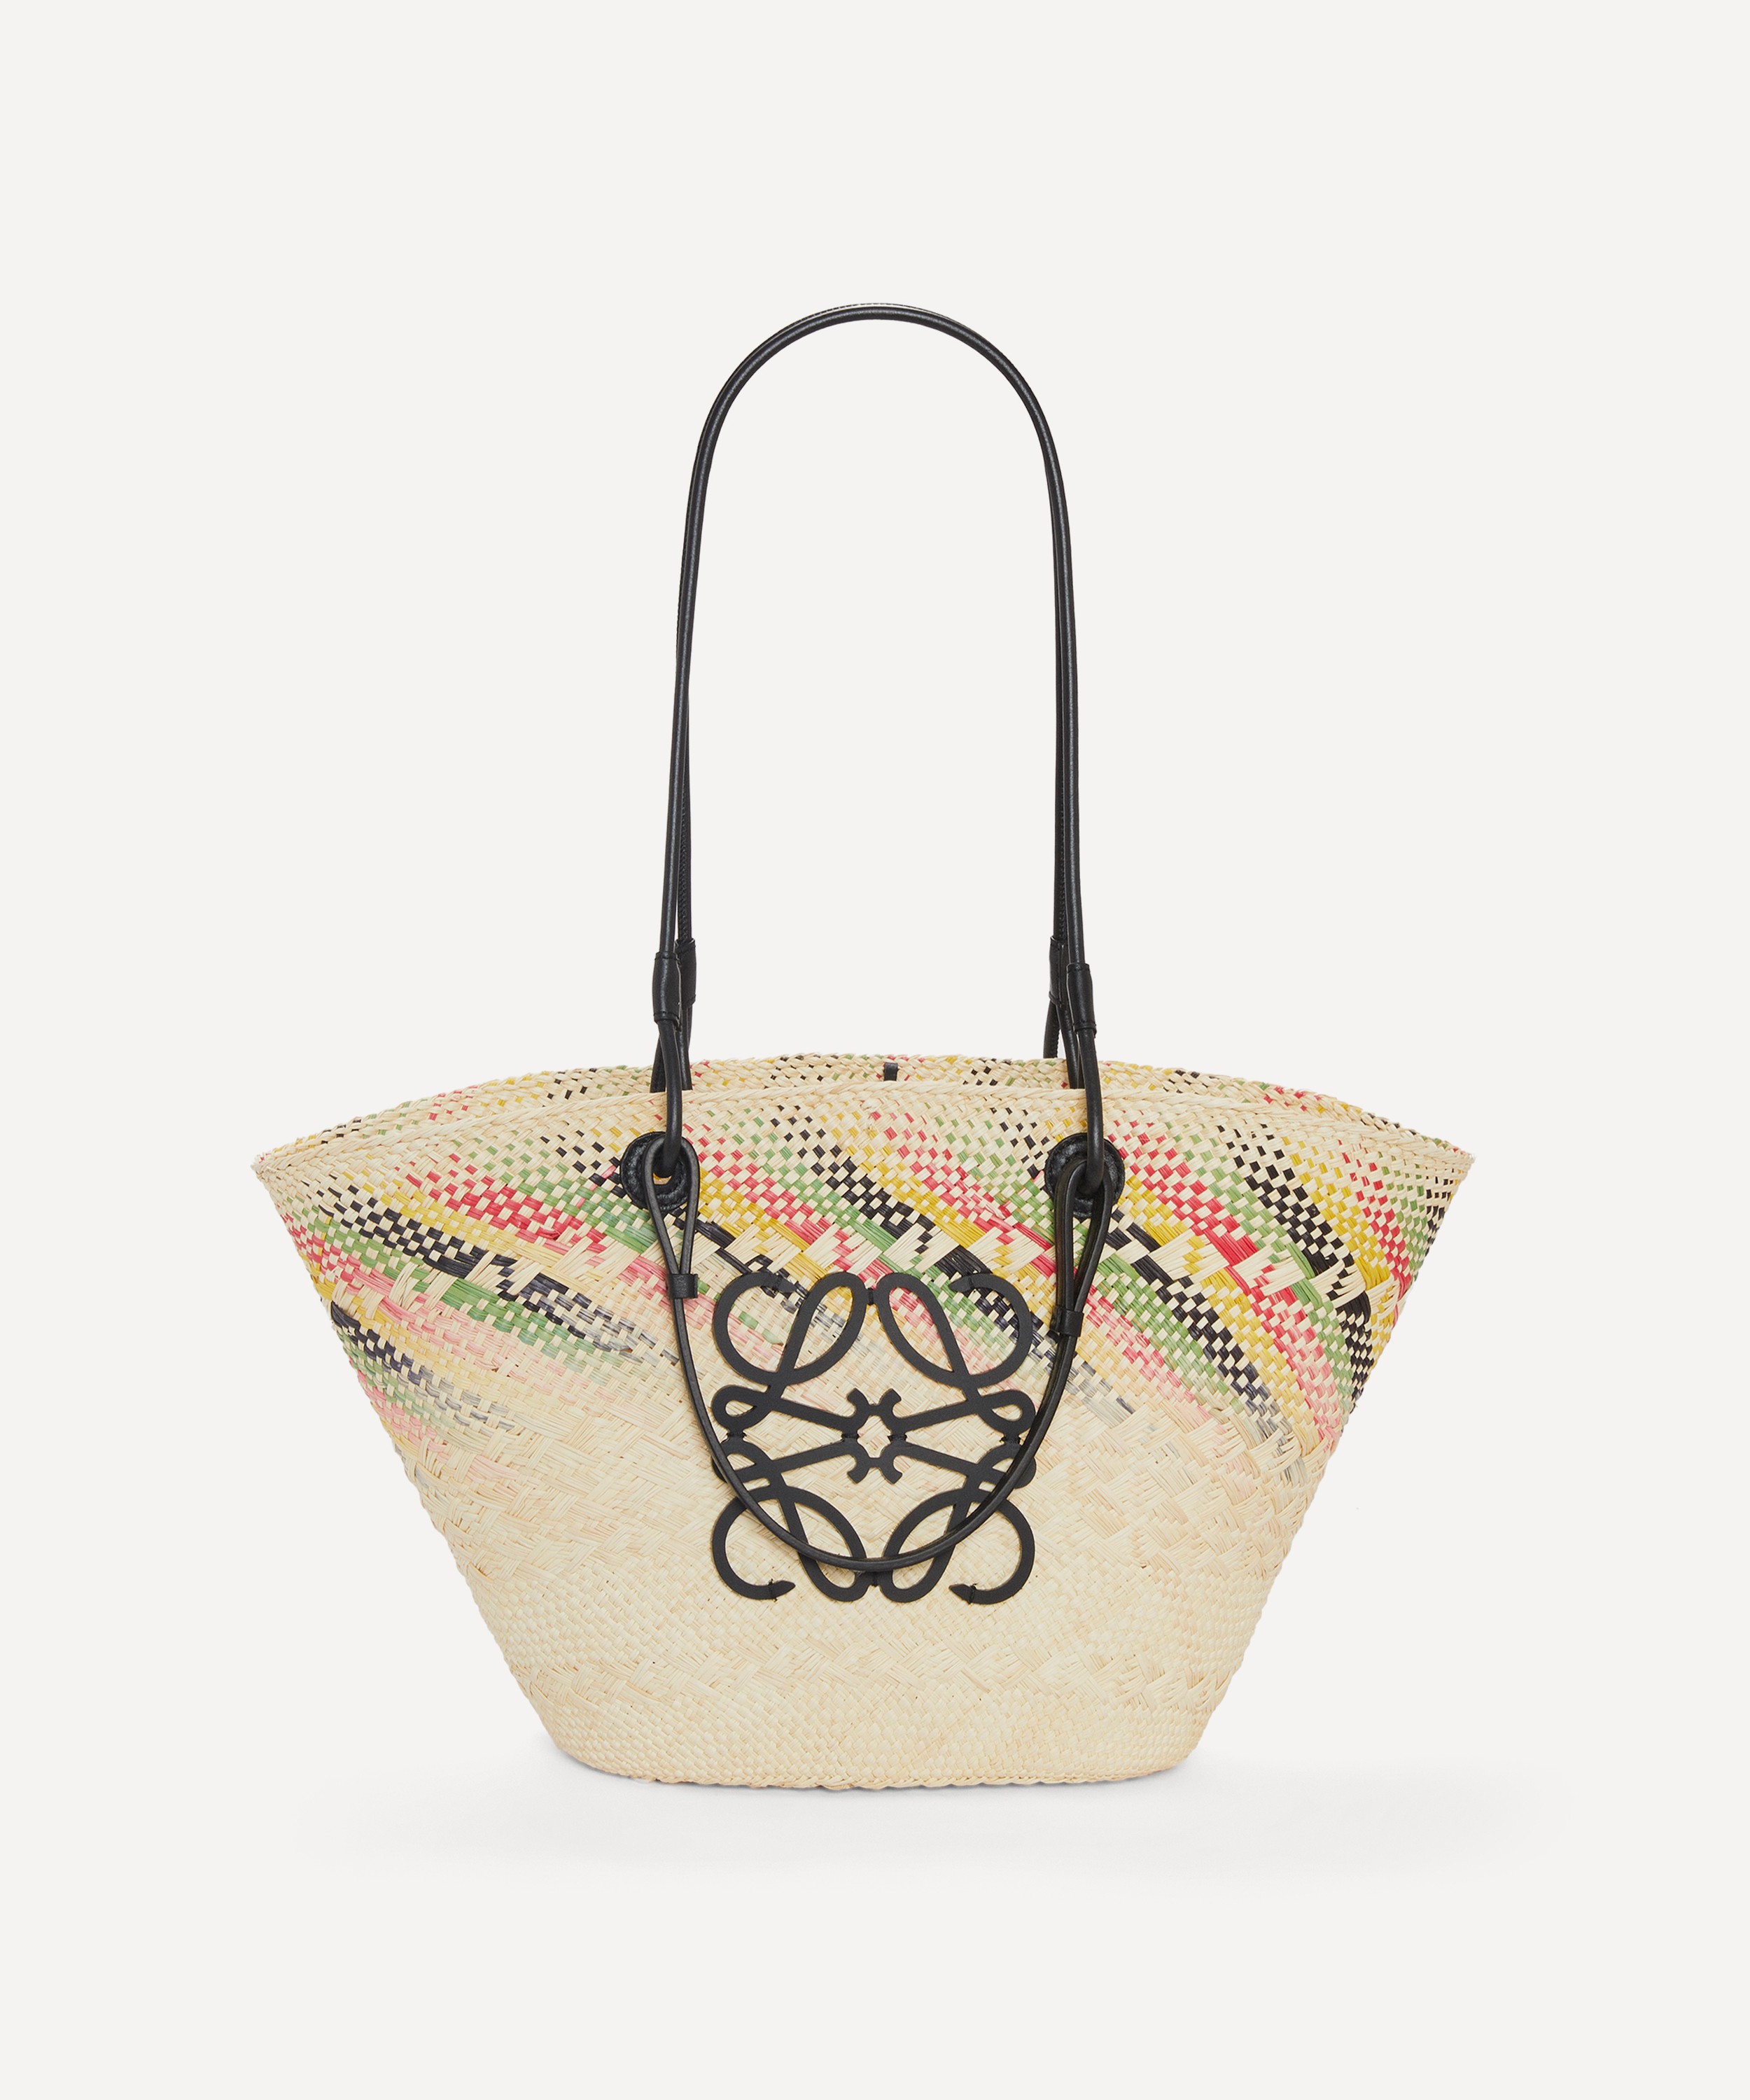 Loewe x Paula's Ibiza Woven Palm Basket Tote Bag